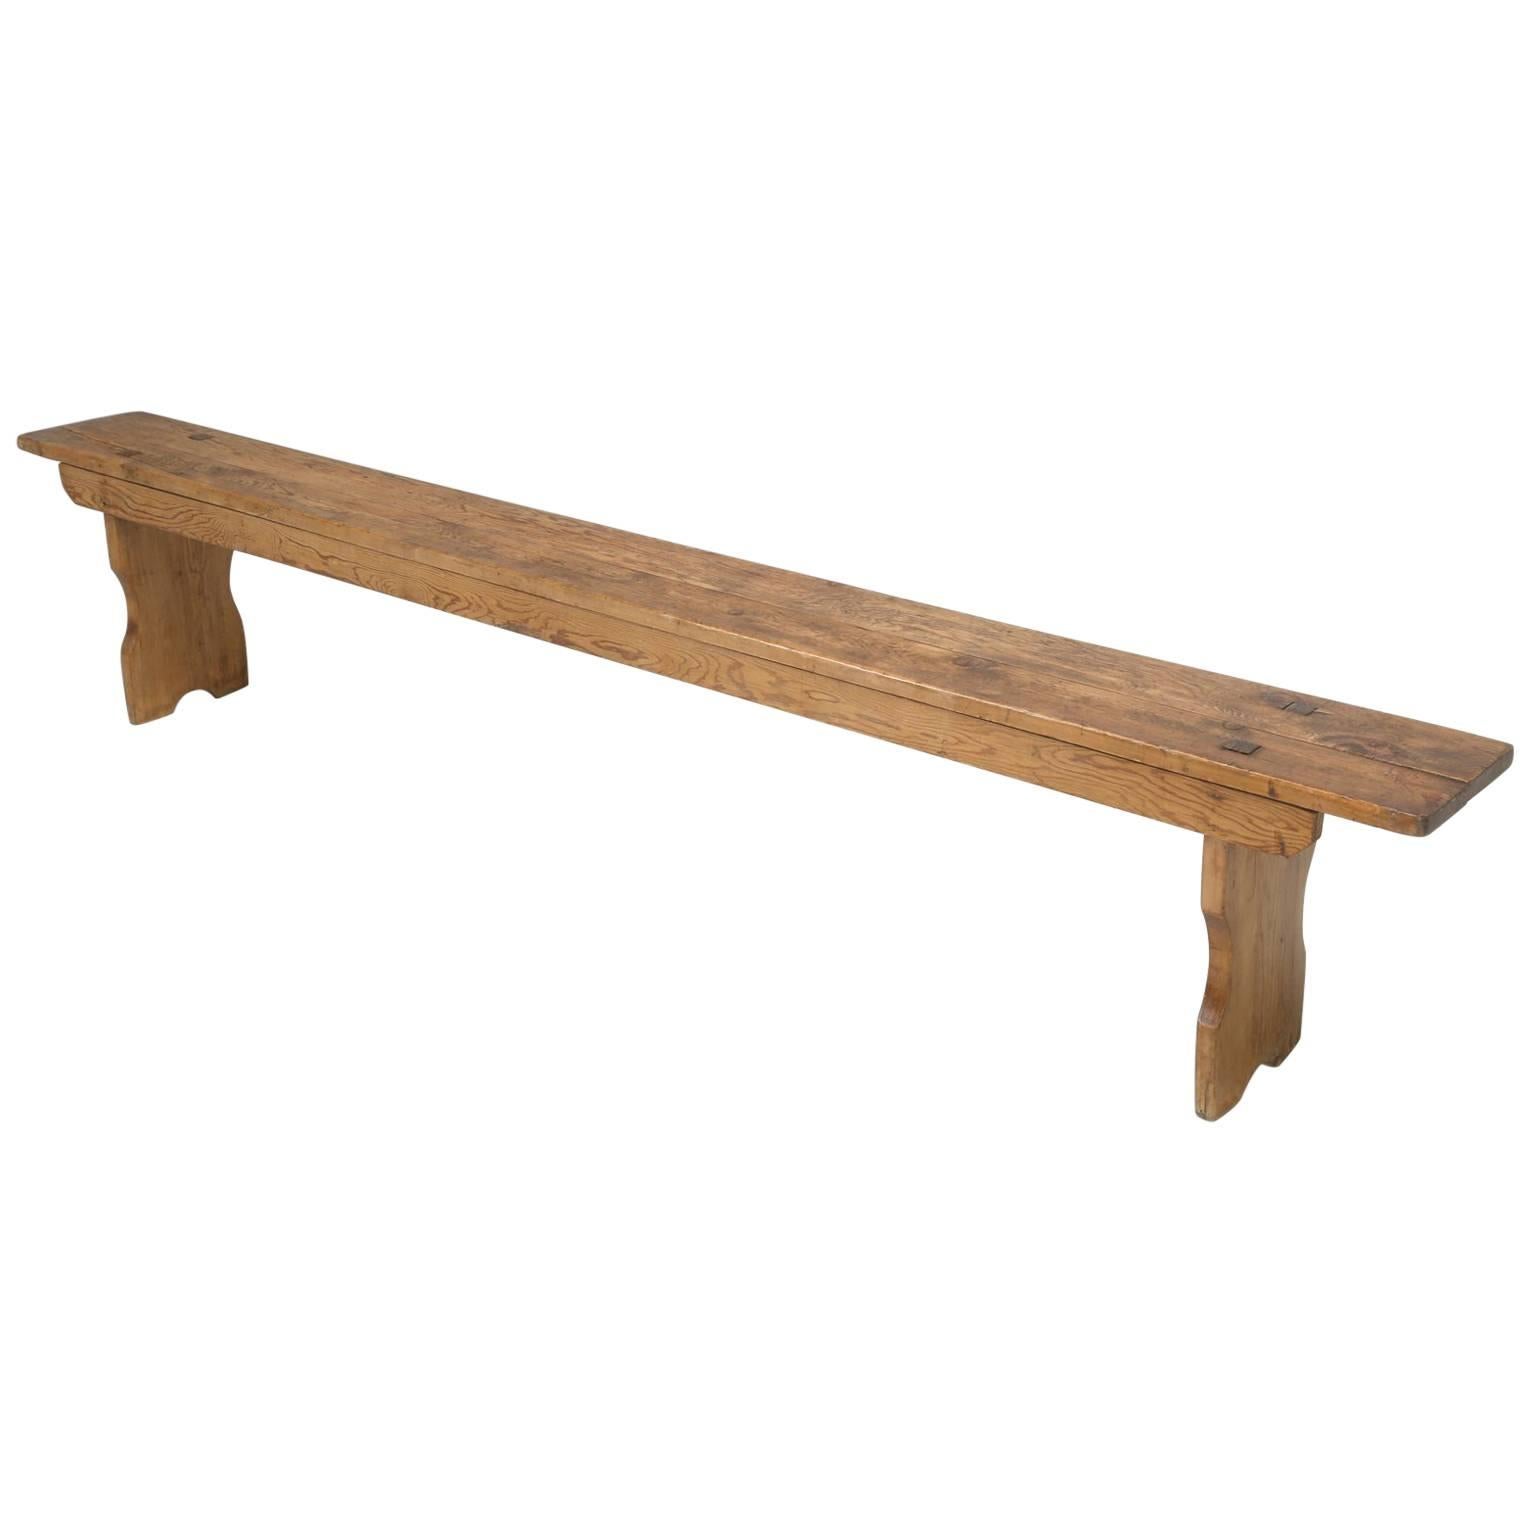 Antique Pine Farm Table Bench